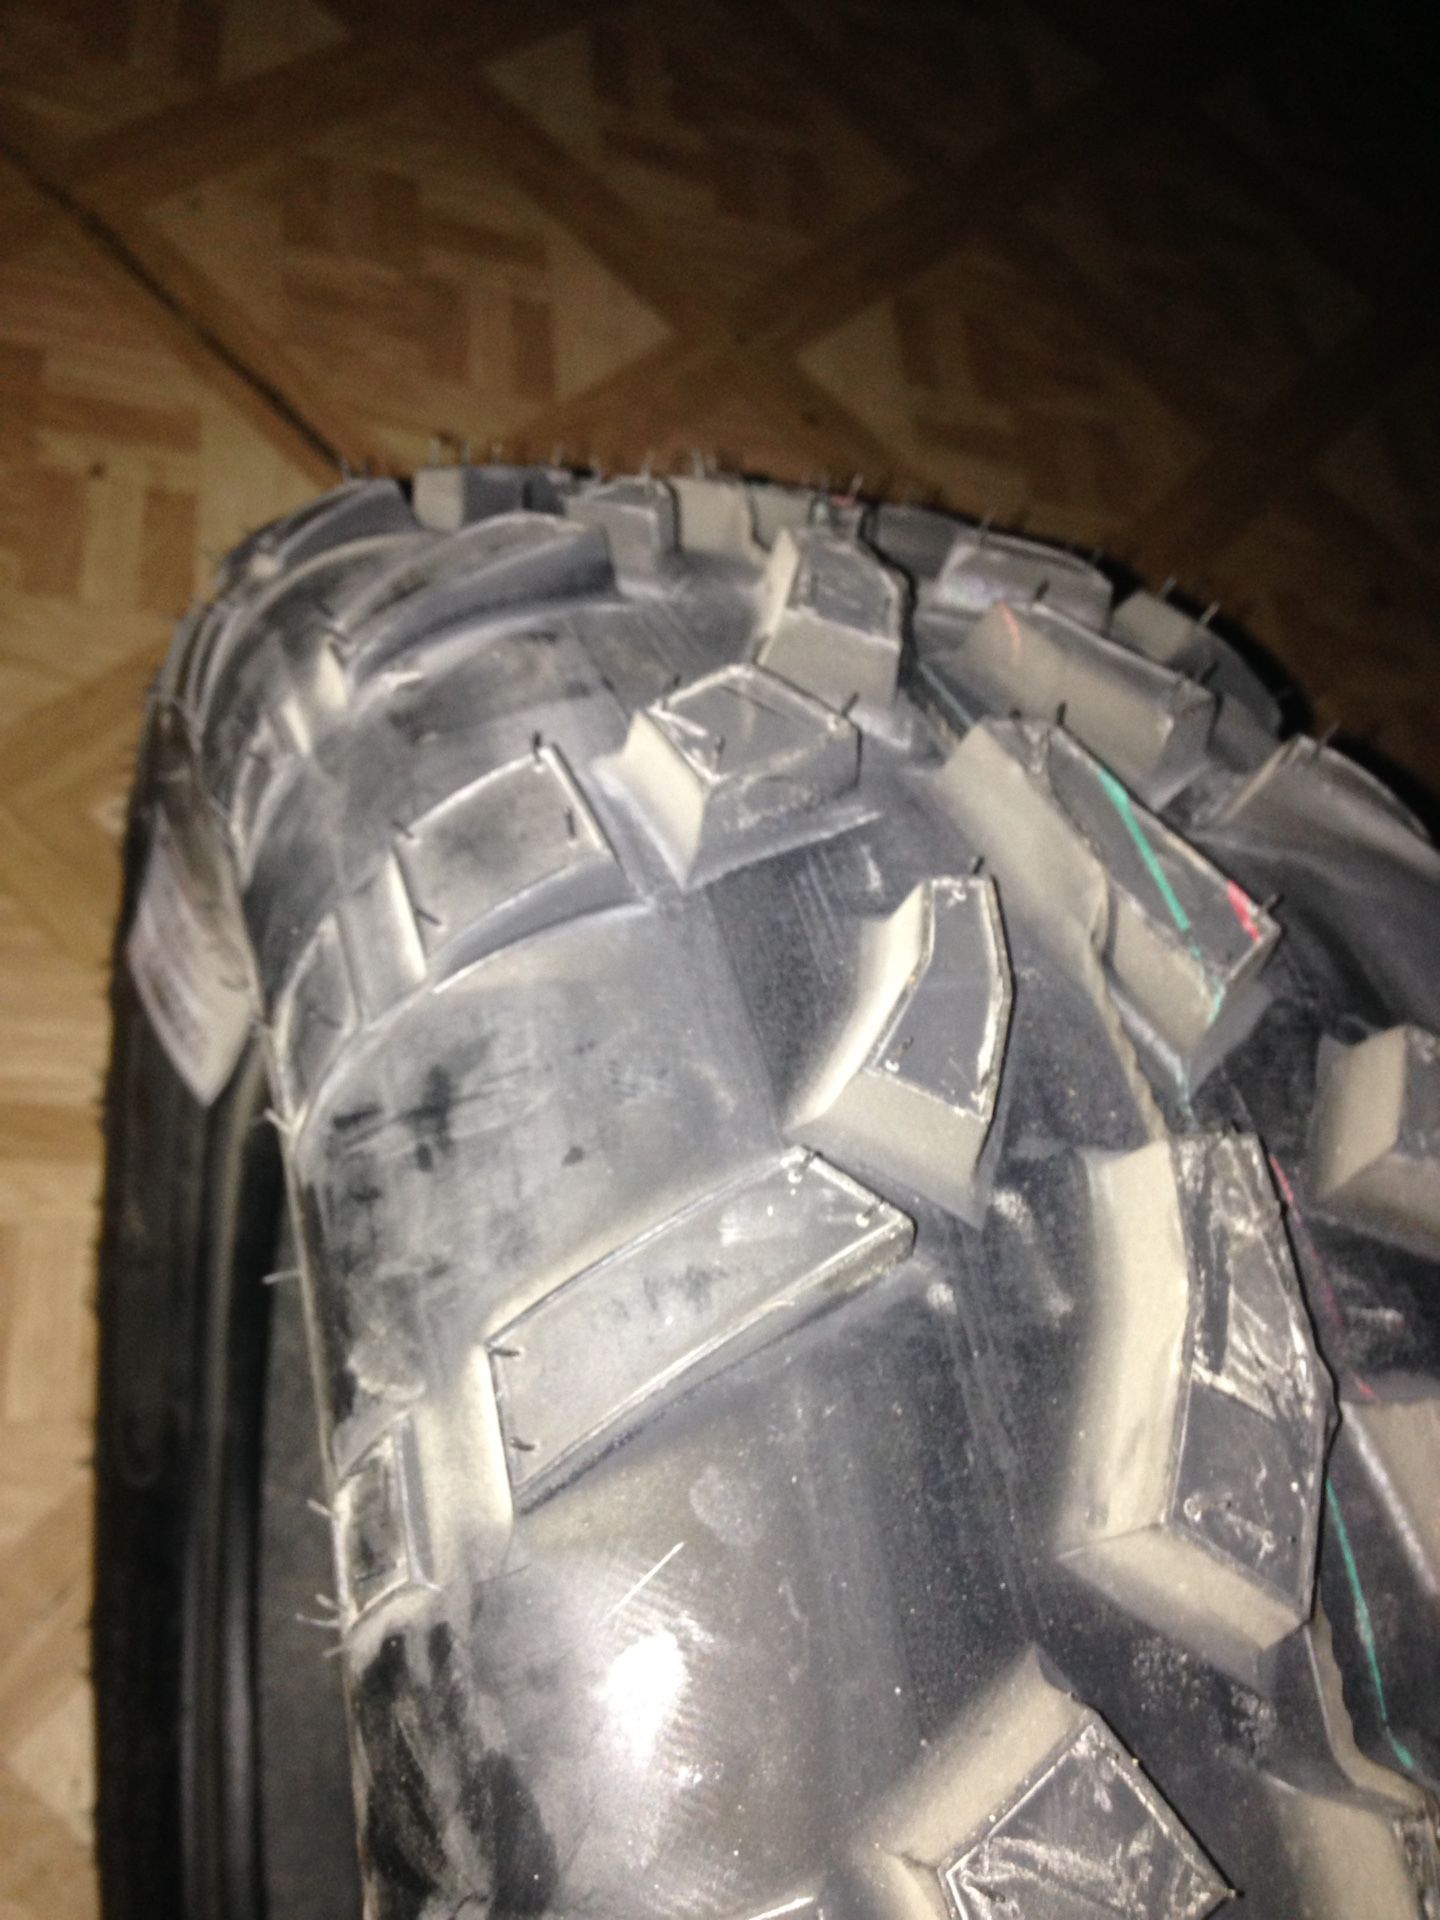 Kenda 26x9.00-14 whole set of 4 atv/utv/sxs tires brand new